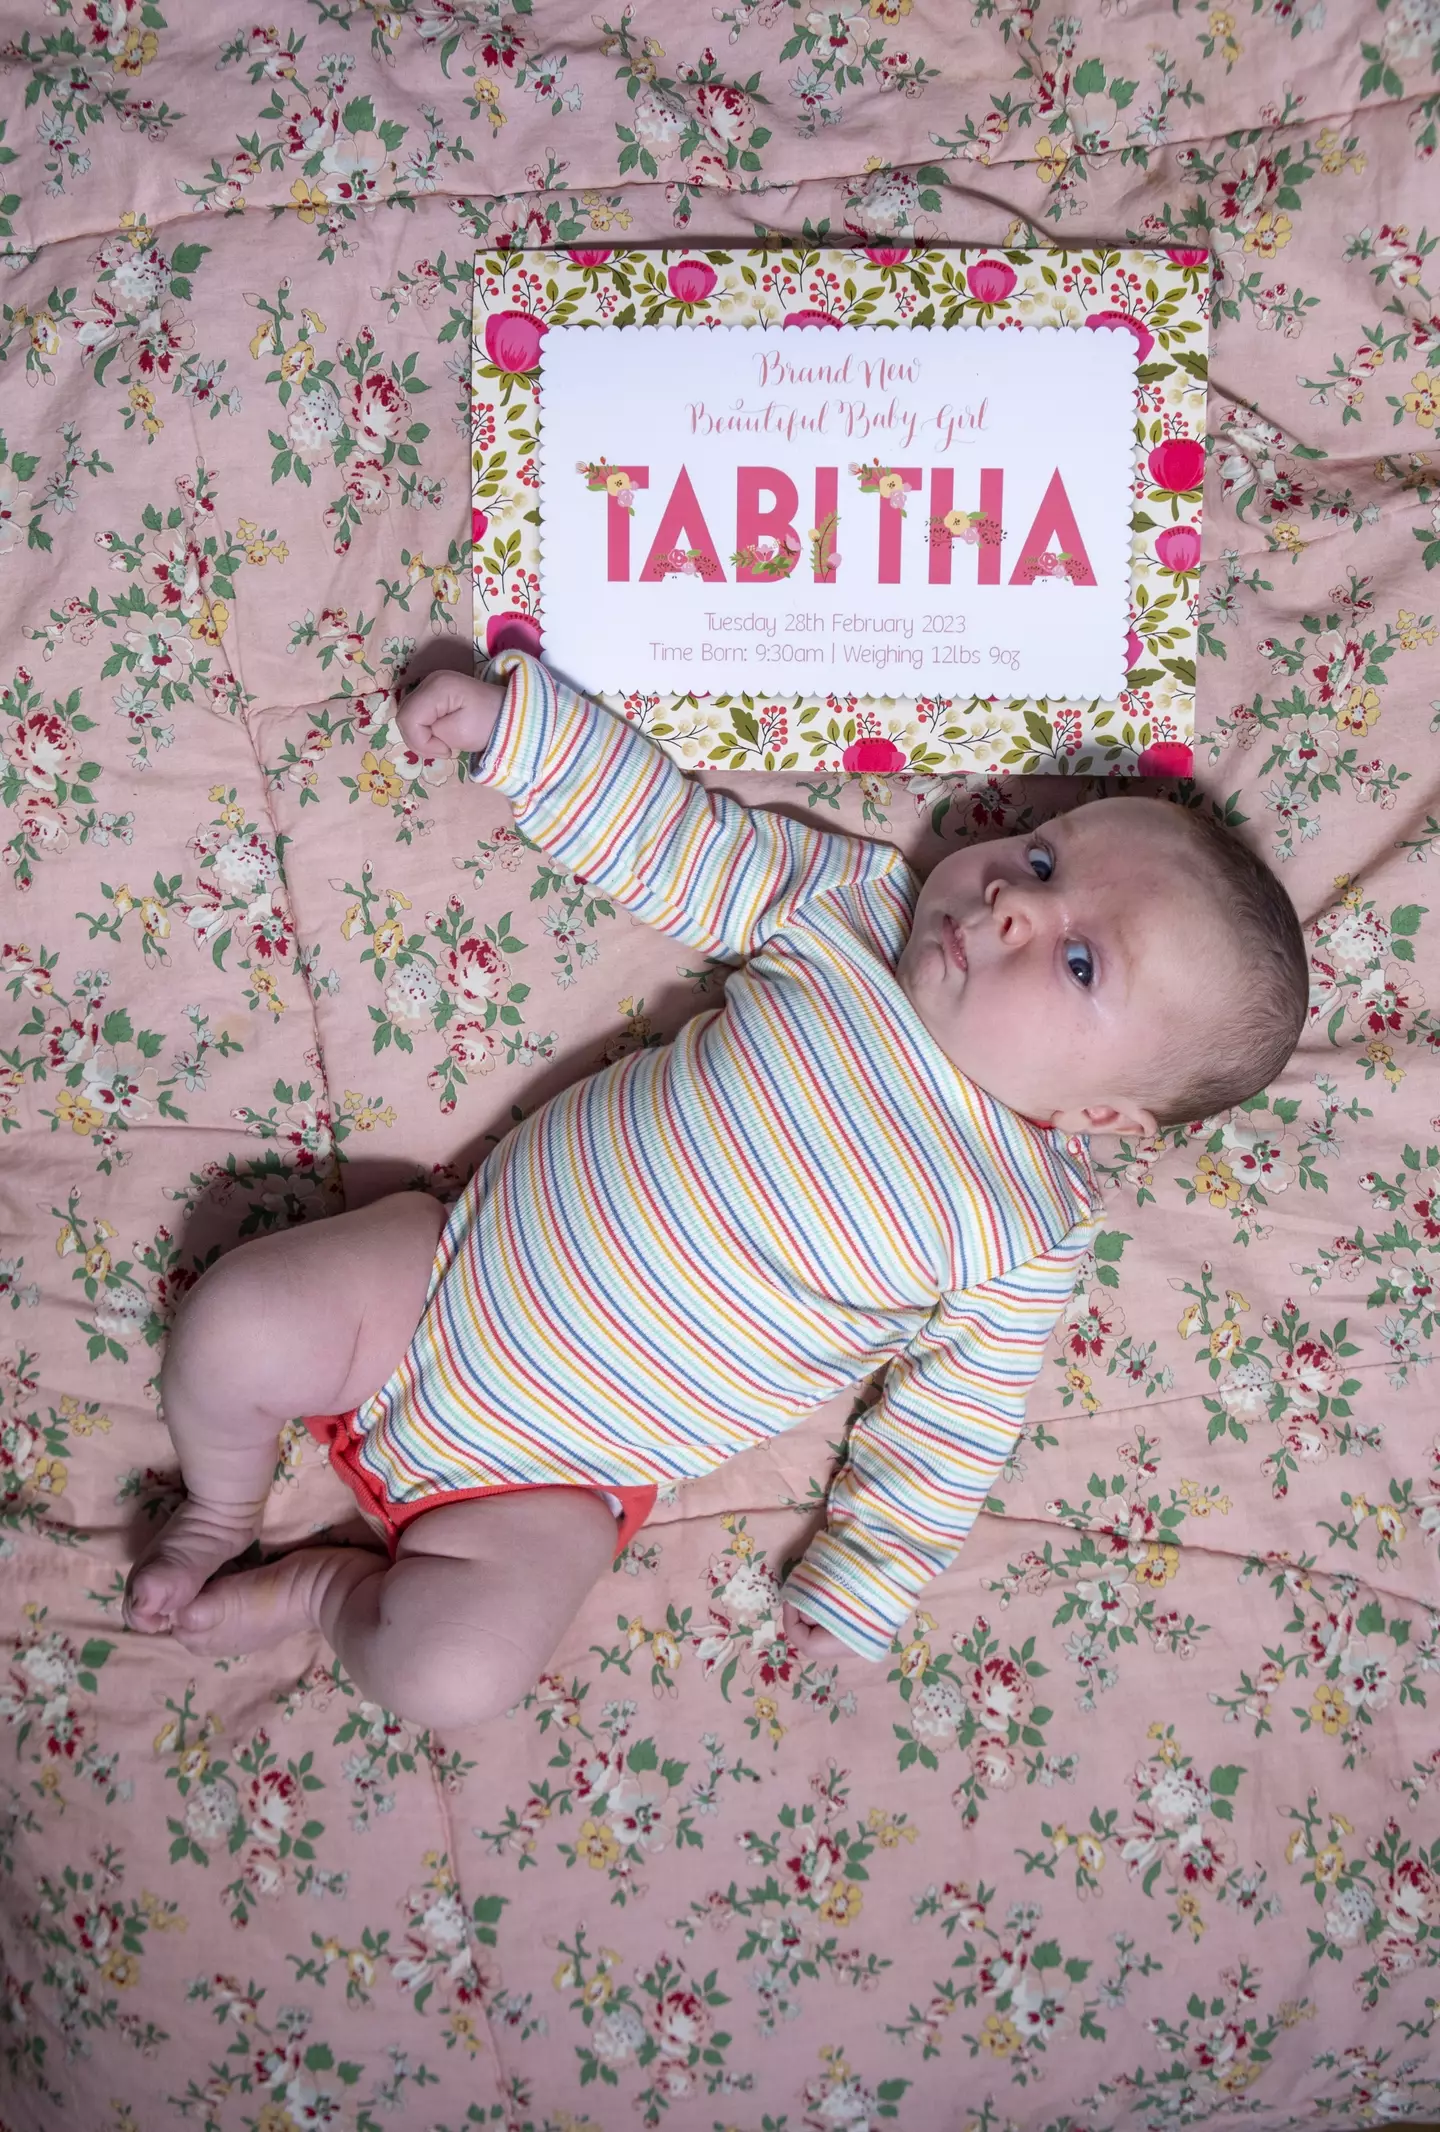 Tabitha was born weighing 12lbs 9oz.